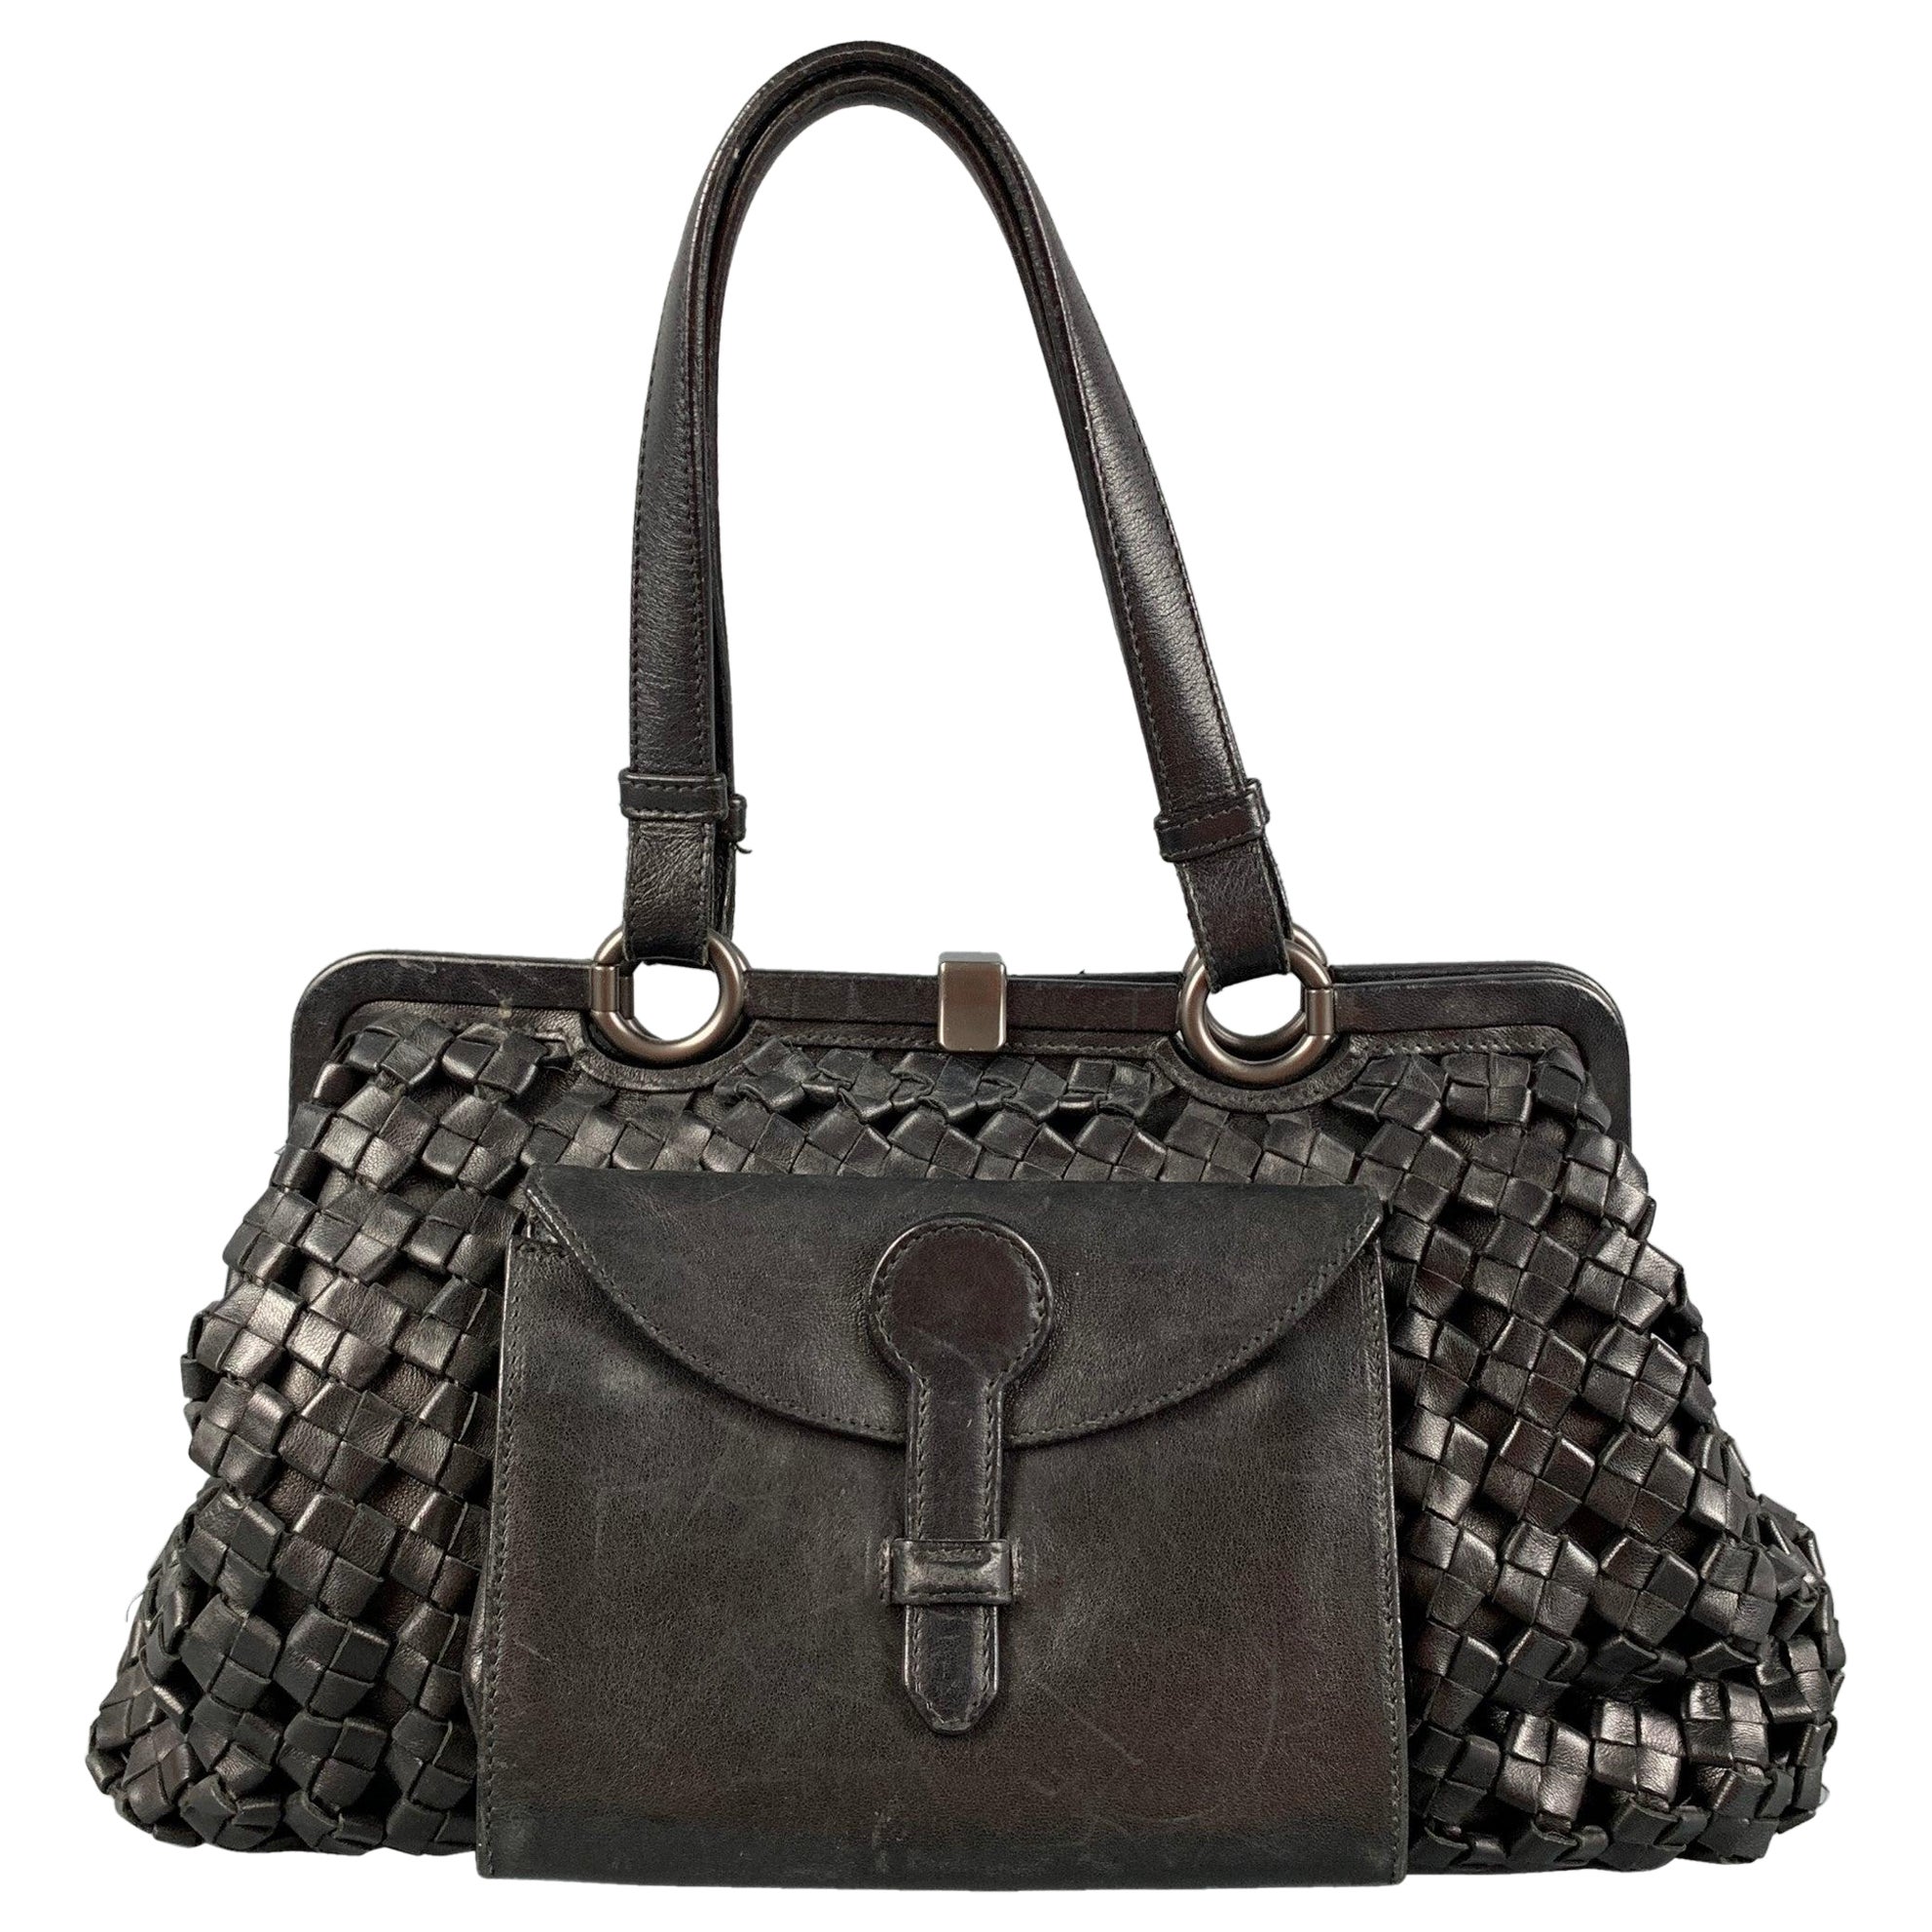 BOTTEGA VENETA Limited Edition Black Woven Leather Satchel Handbag For Sale